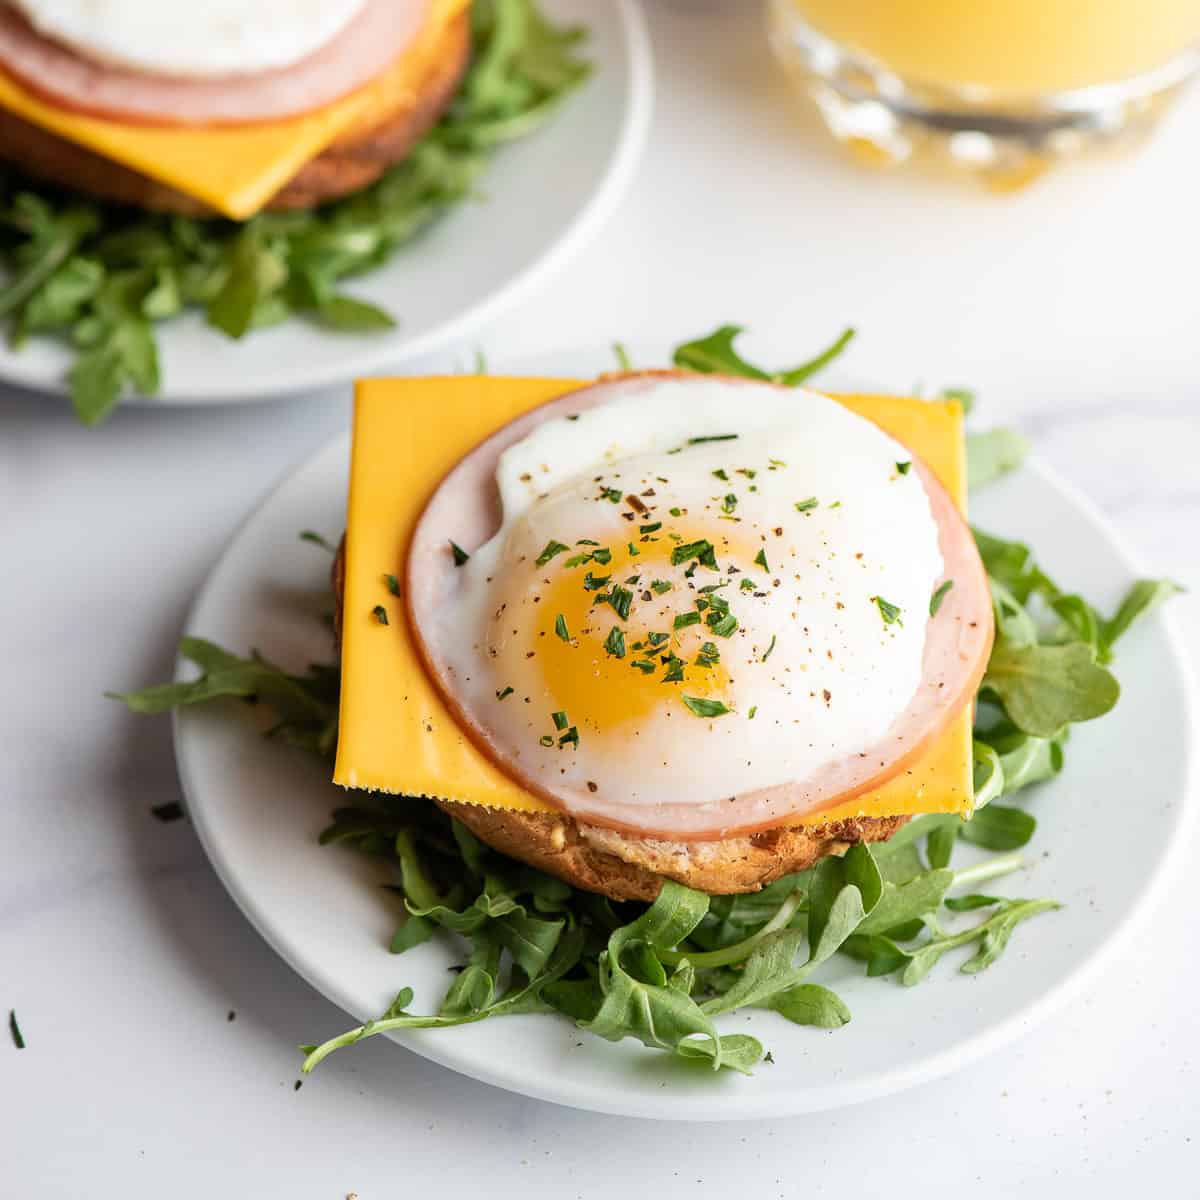 https://makeitskinnyplease.com/wp-content/uploads/2022/03/air-fryer-poached-eggs-on-plate.jpg